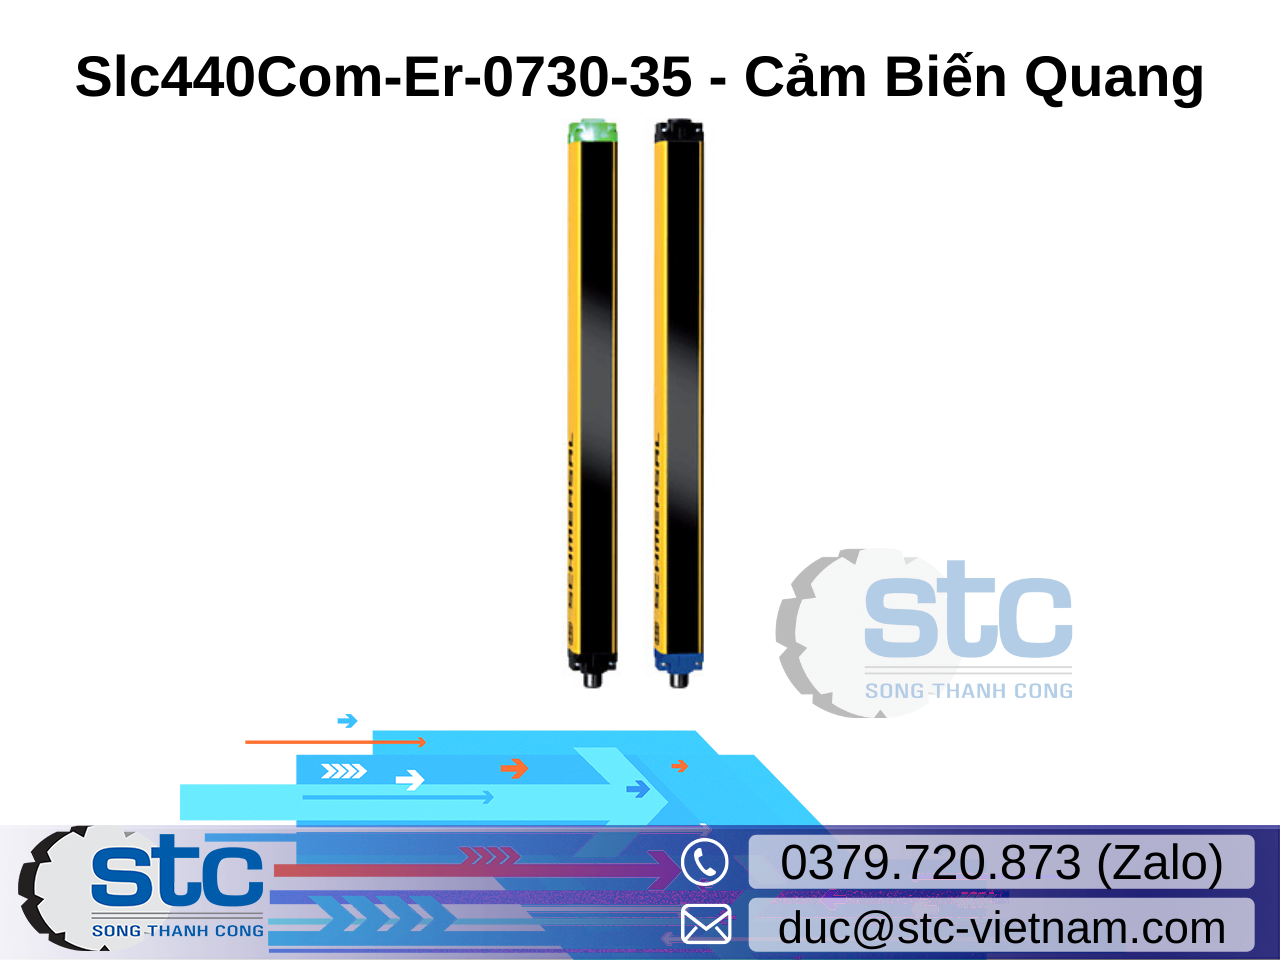 slc440com-er-0730-35-cam-bien-quang-schmersal.png